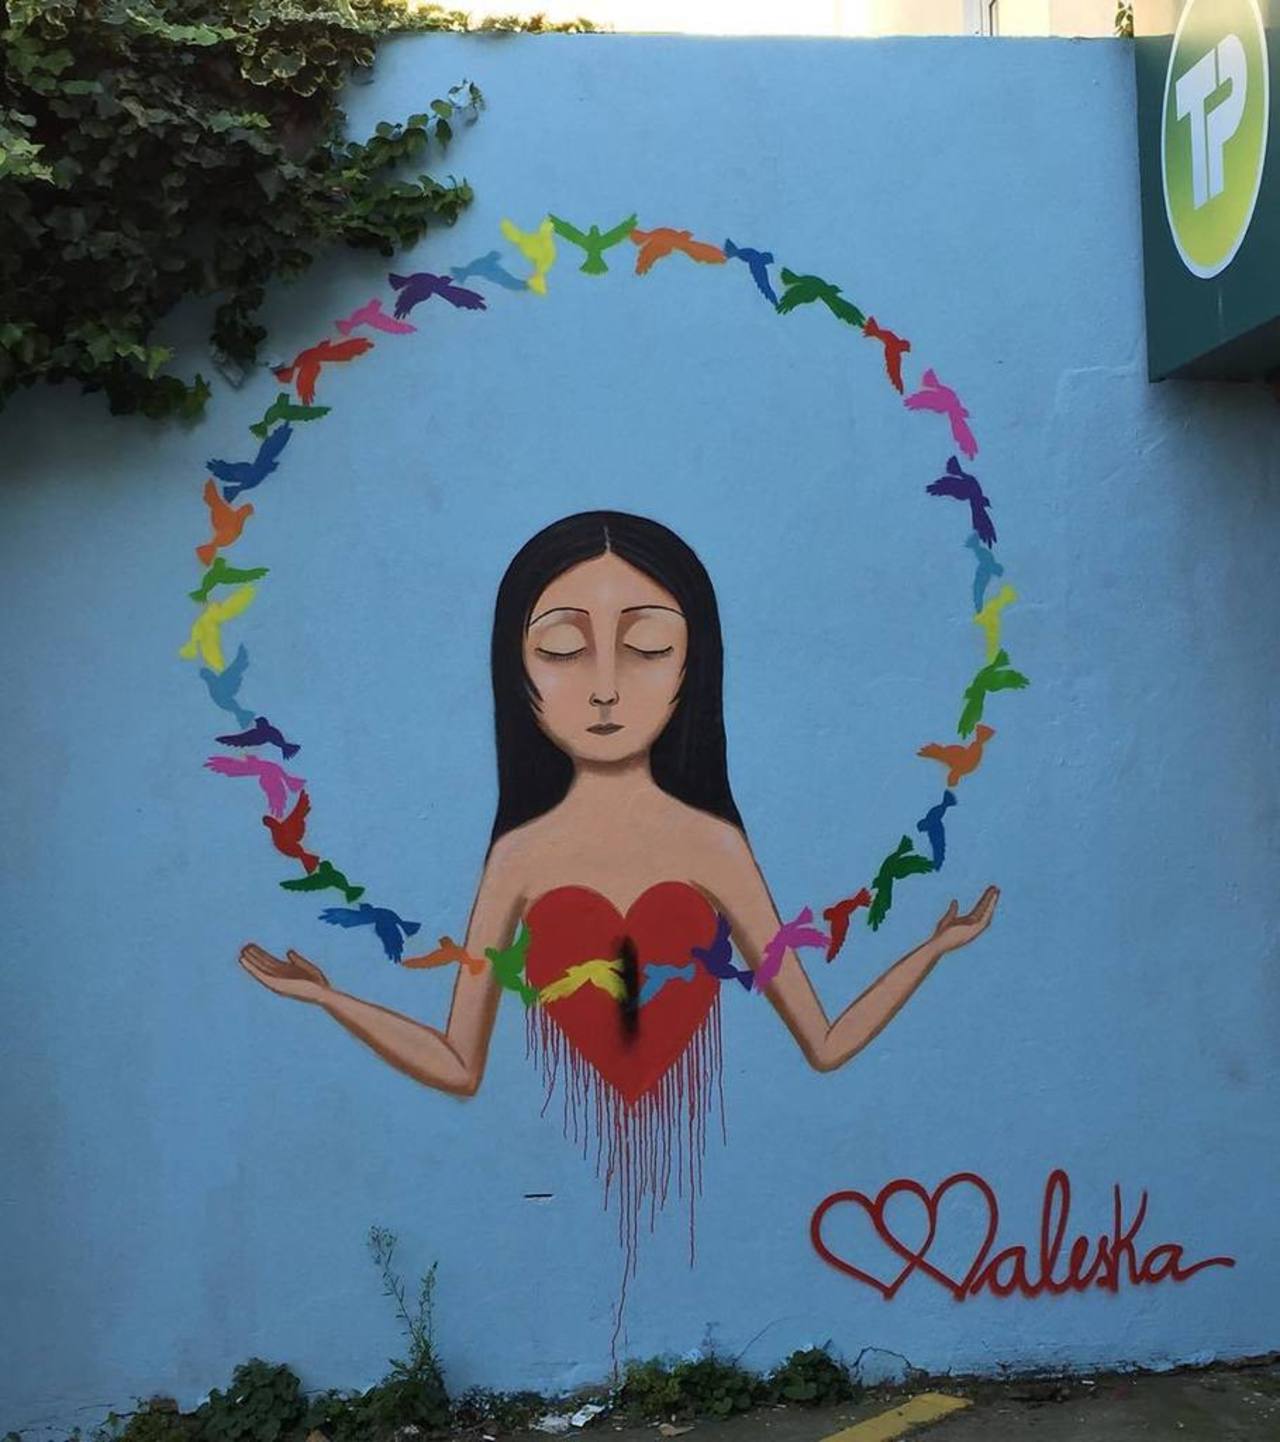 via #vera45 "http://ift.tt/1Ld6GoP" #graffiti #streetart http://t.co/biH47oYSgS